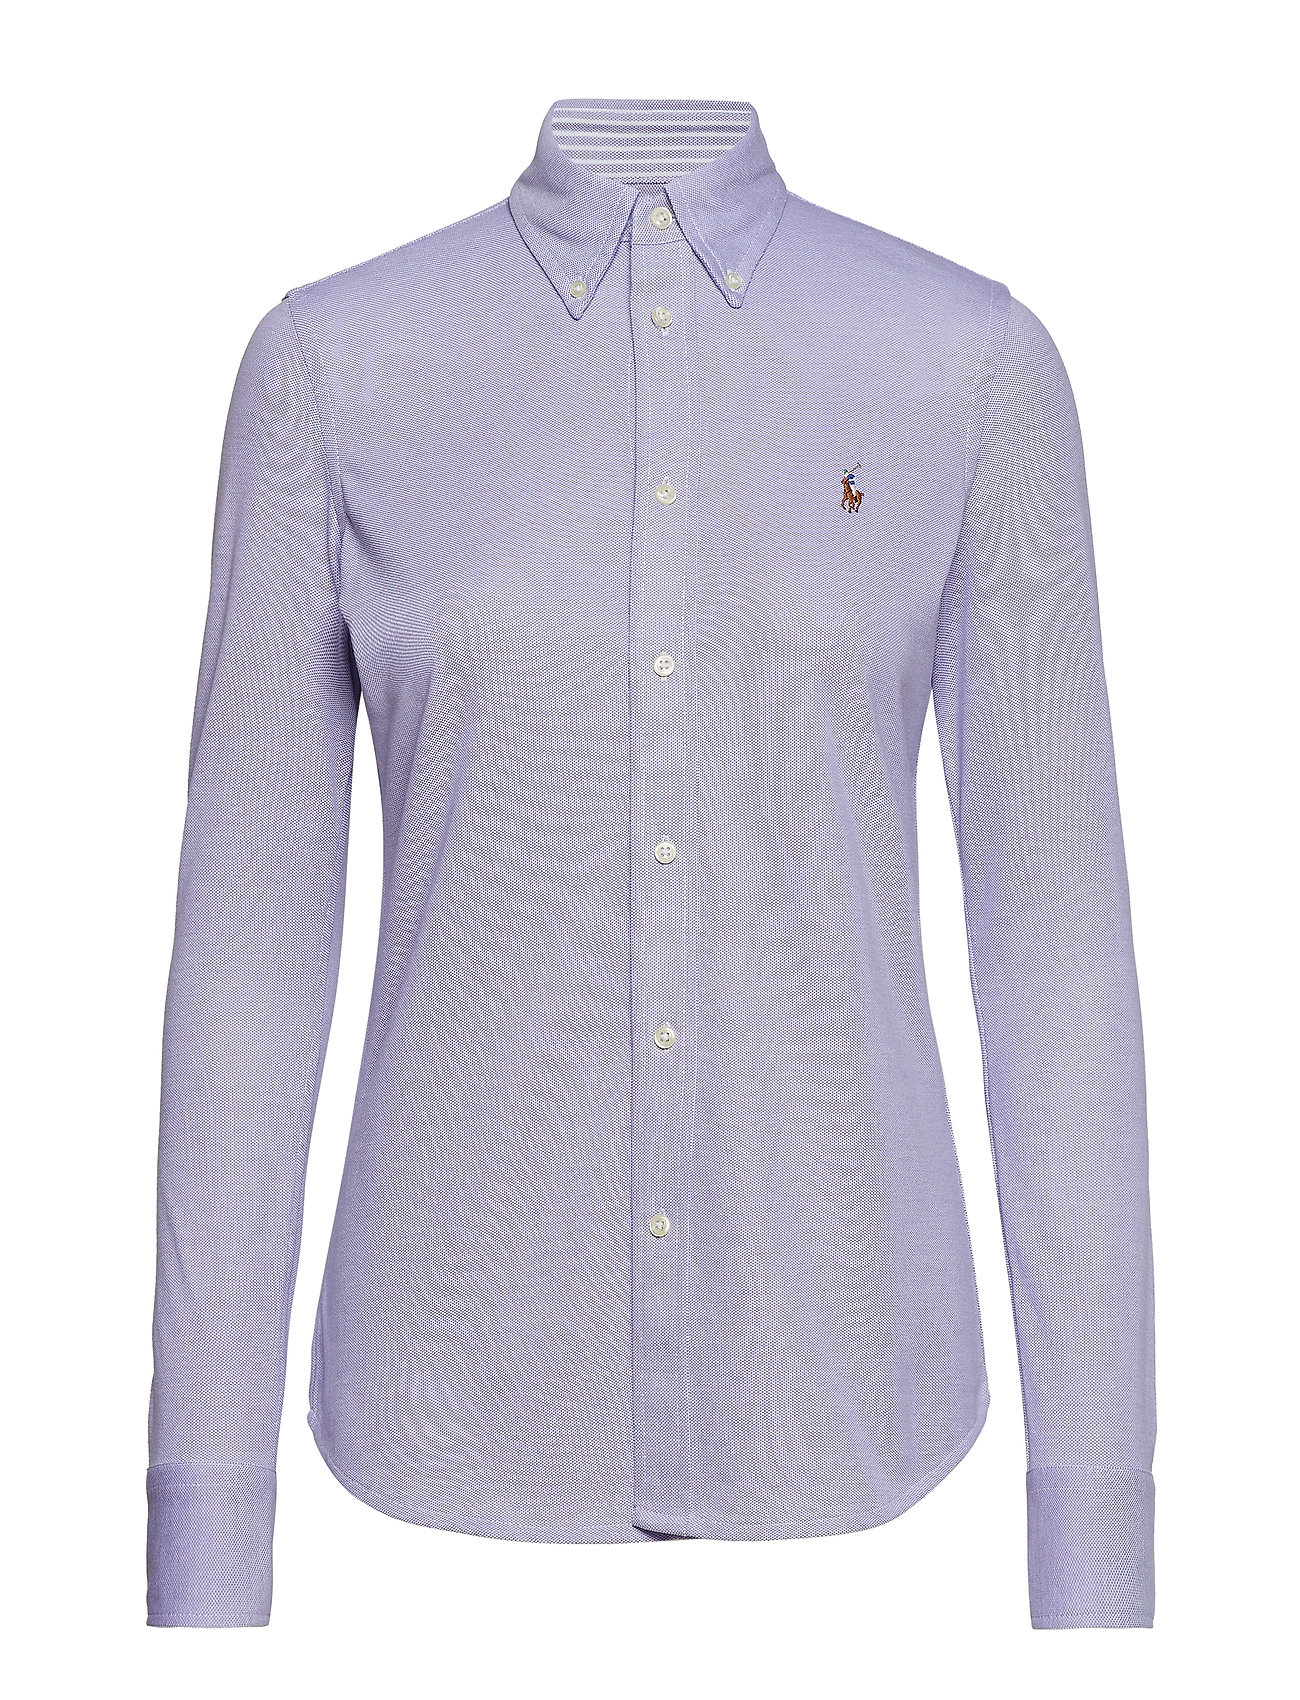 Knit Cotton Oxford Shirt (Carmel Pink) (135 €) - Polo Ralph Lauren ...